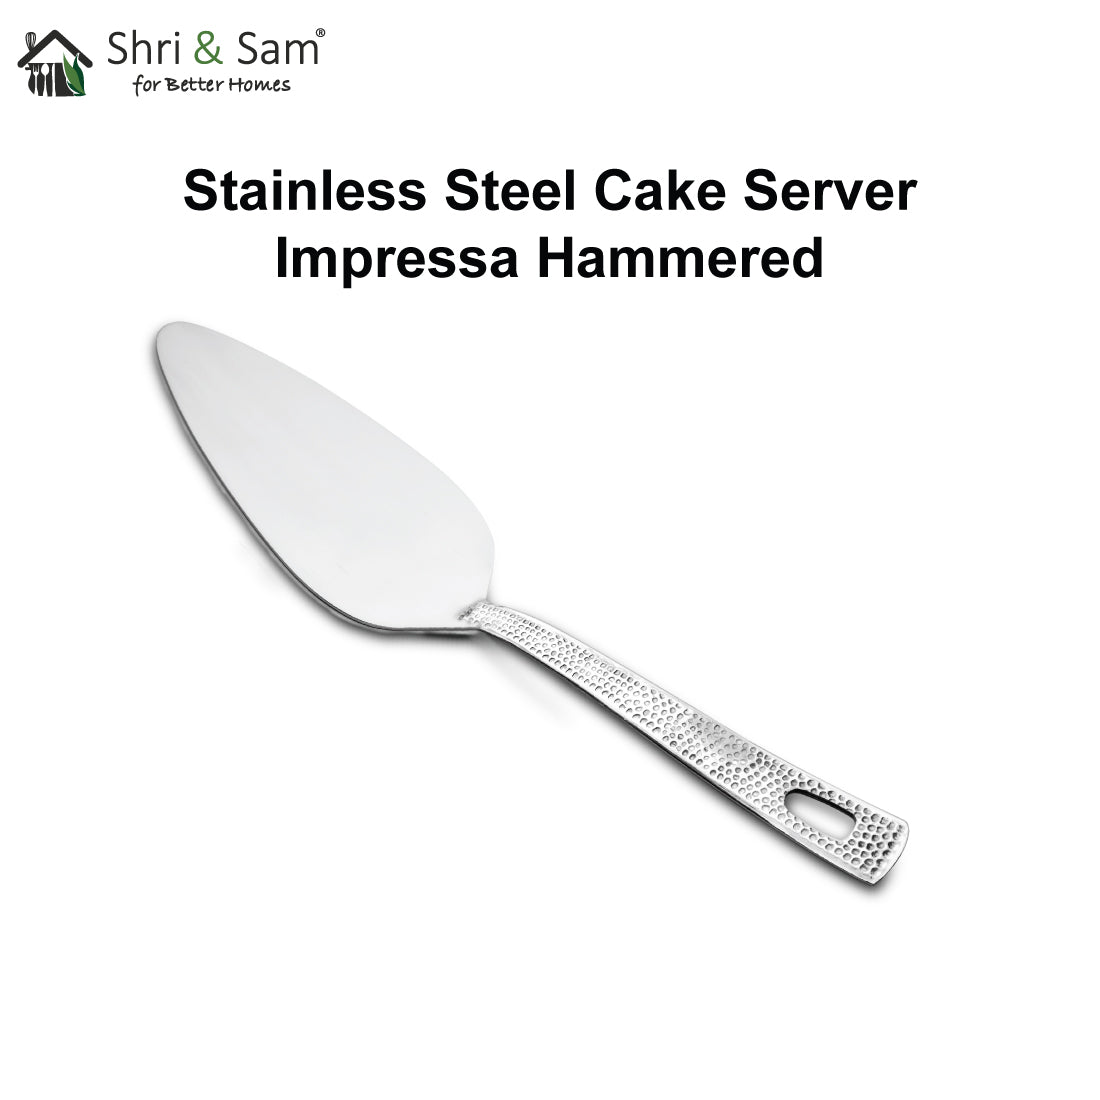 Stainless Steel Cake Server Impressa Hammered